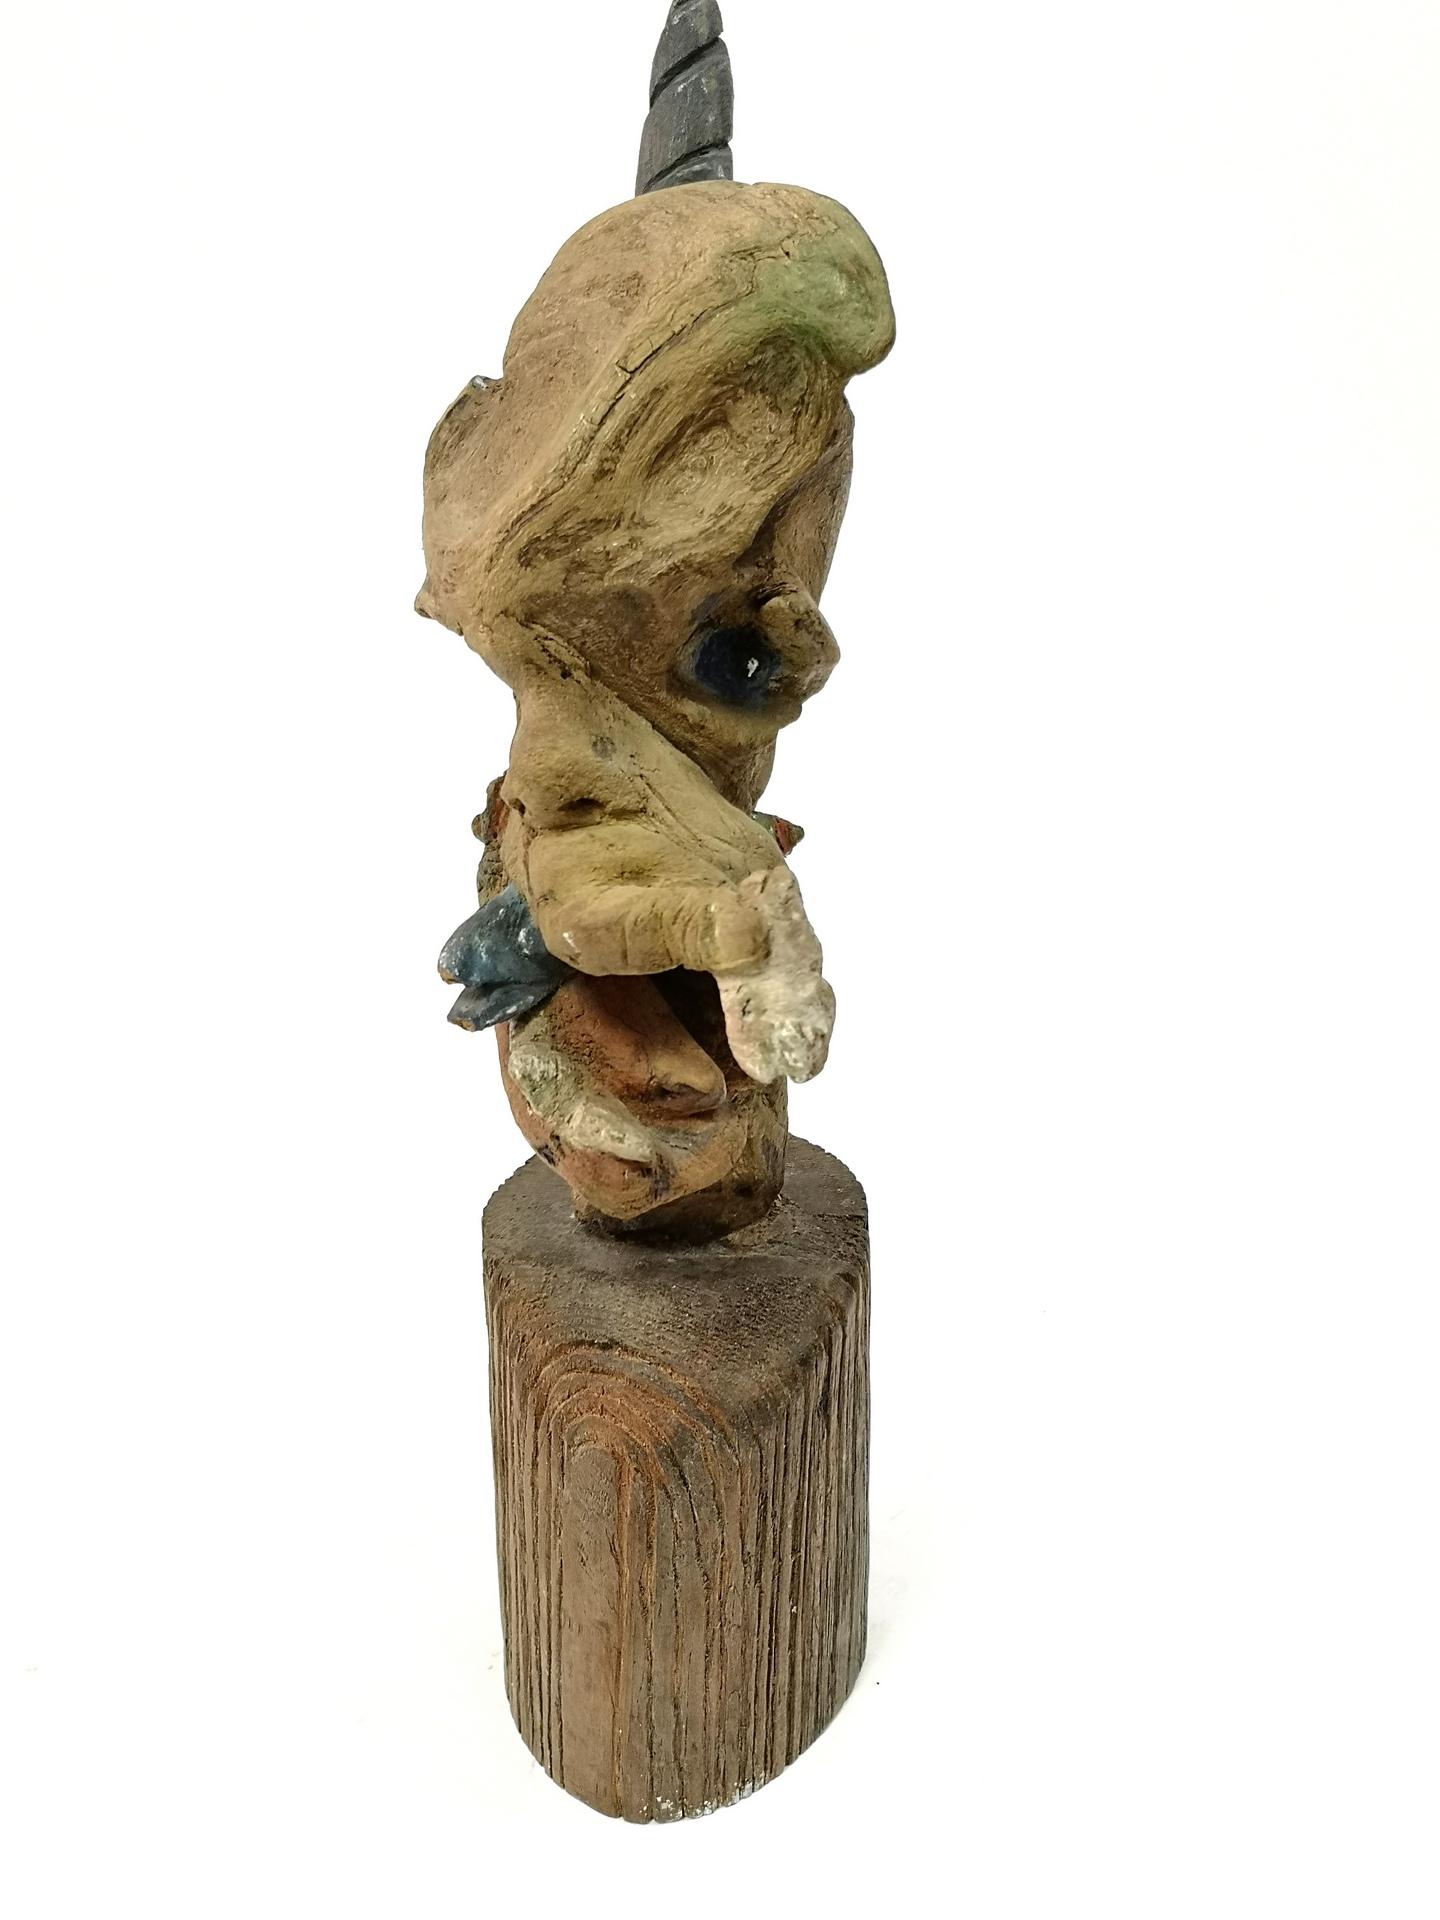 Graphic, organic carved head sculpture. Uknown artist.